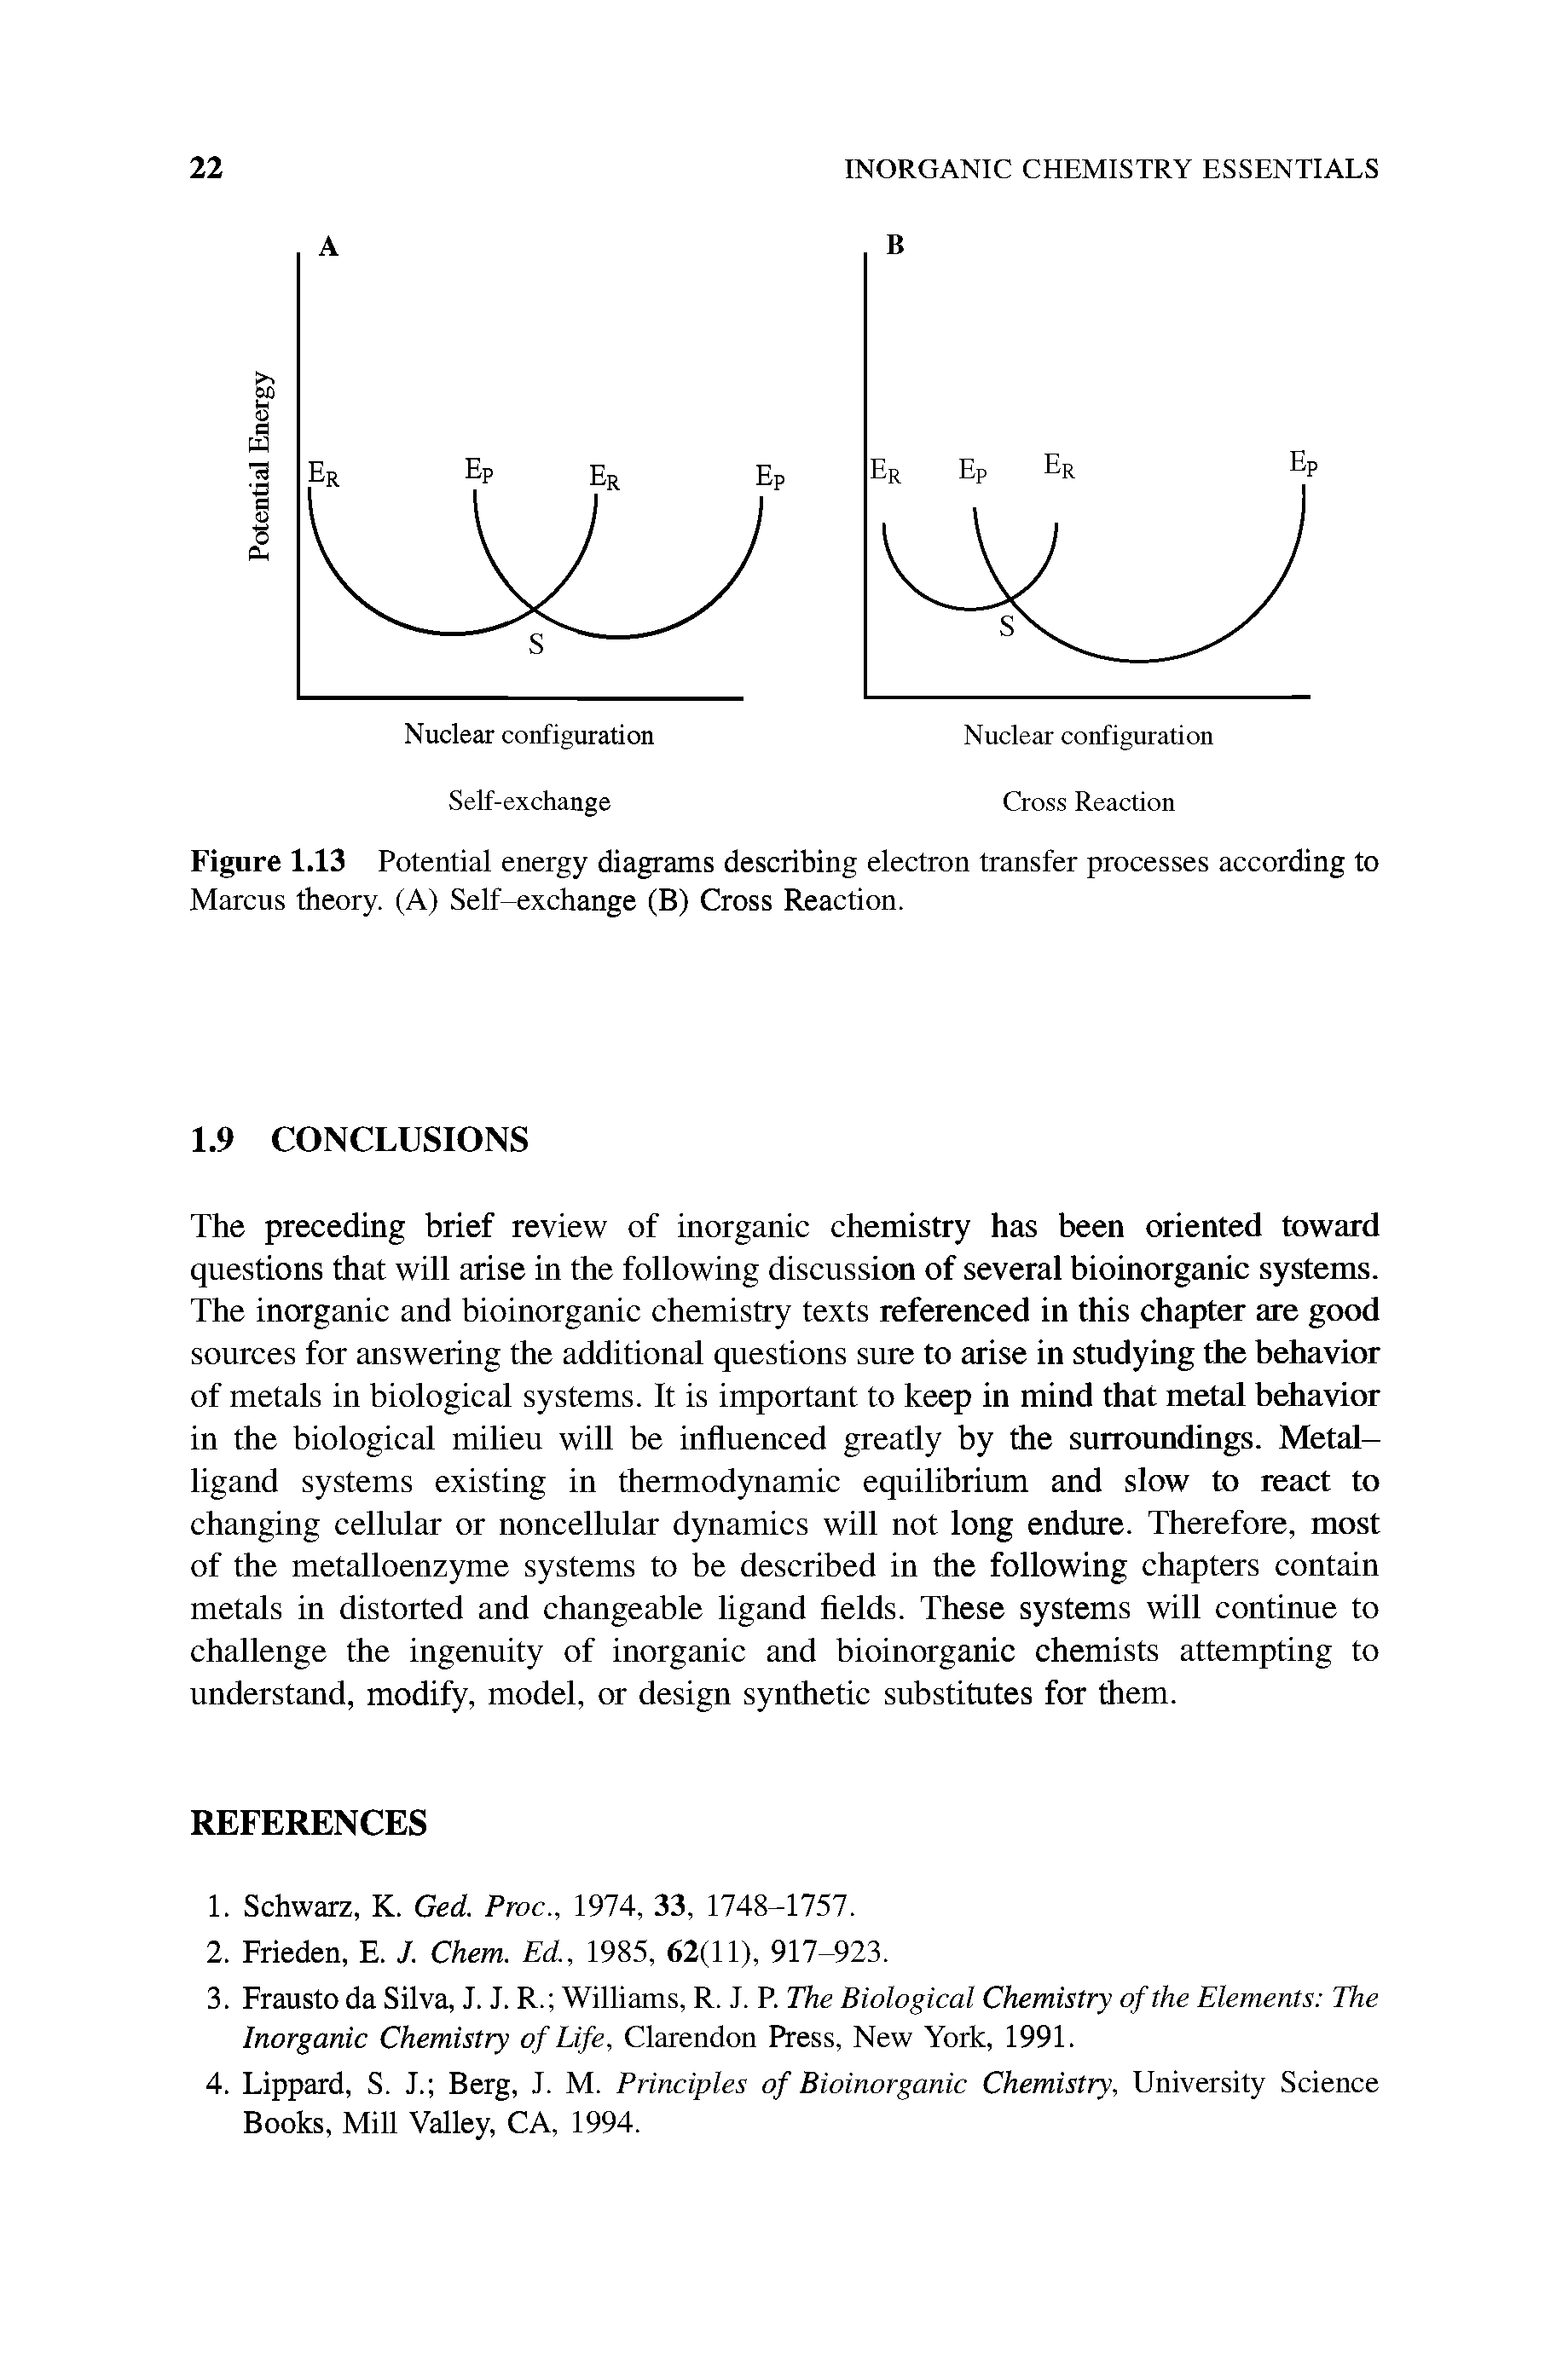 Figure 1.13 Potential energy diagrams describing electron transfer processes according to Marcus theory. (A) Self-exchange (B) Cross Reaction.